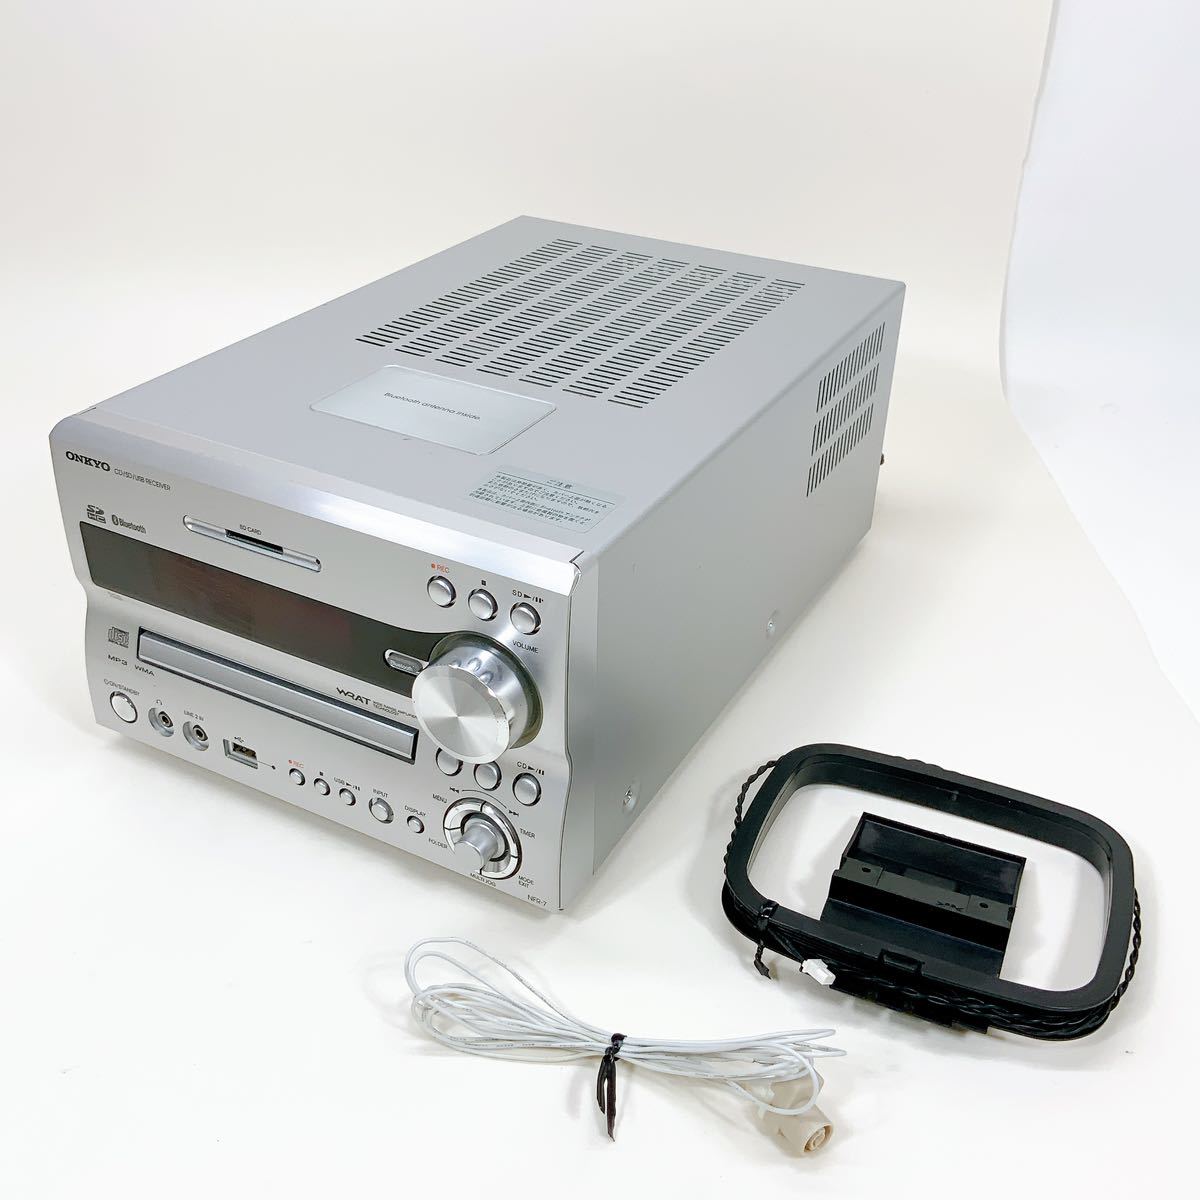 53) ONKYO オンキョー NFR-7 ハイレゾ対応 CD SD USB Bluetooth